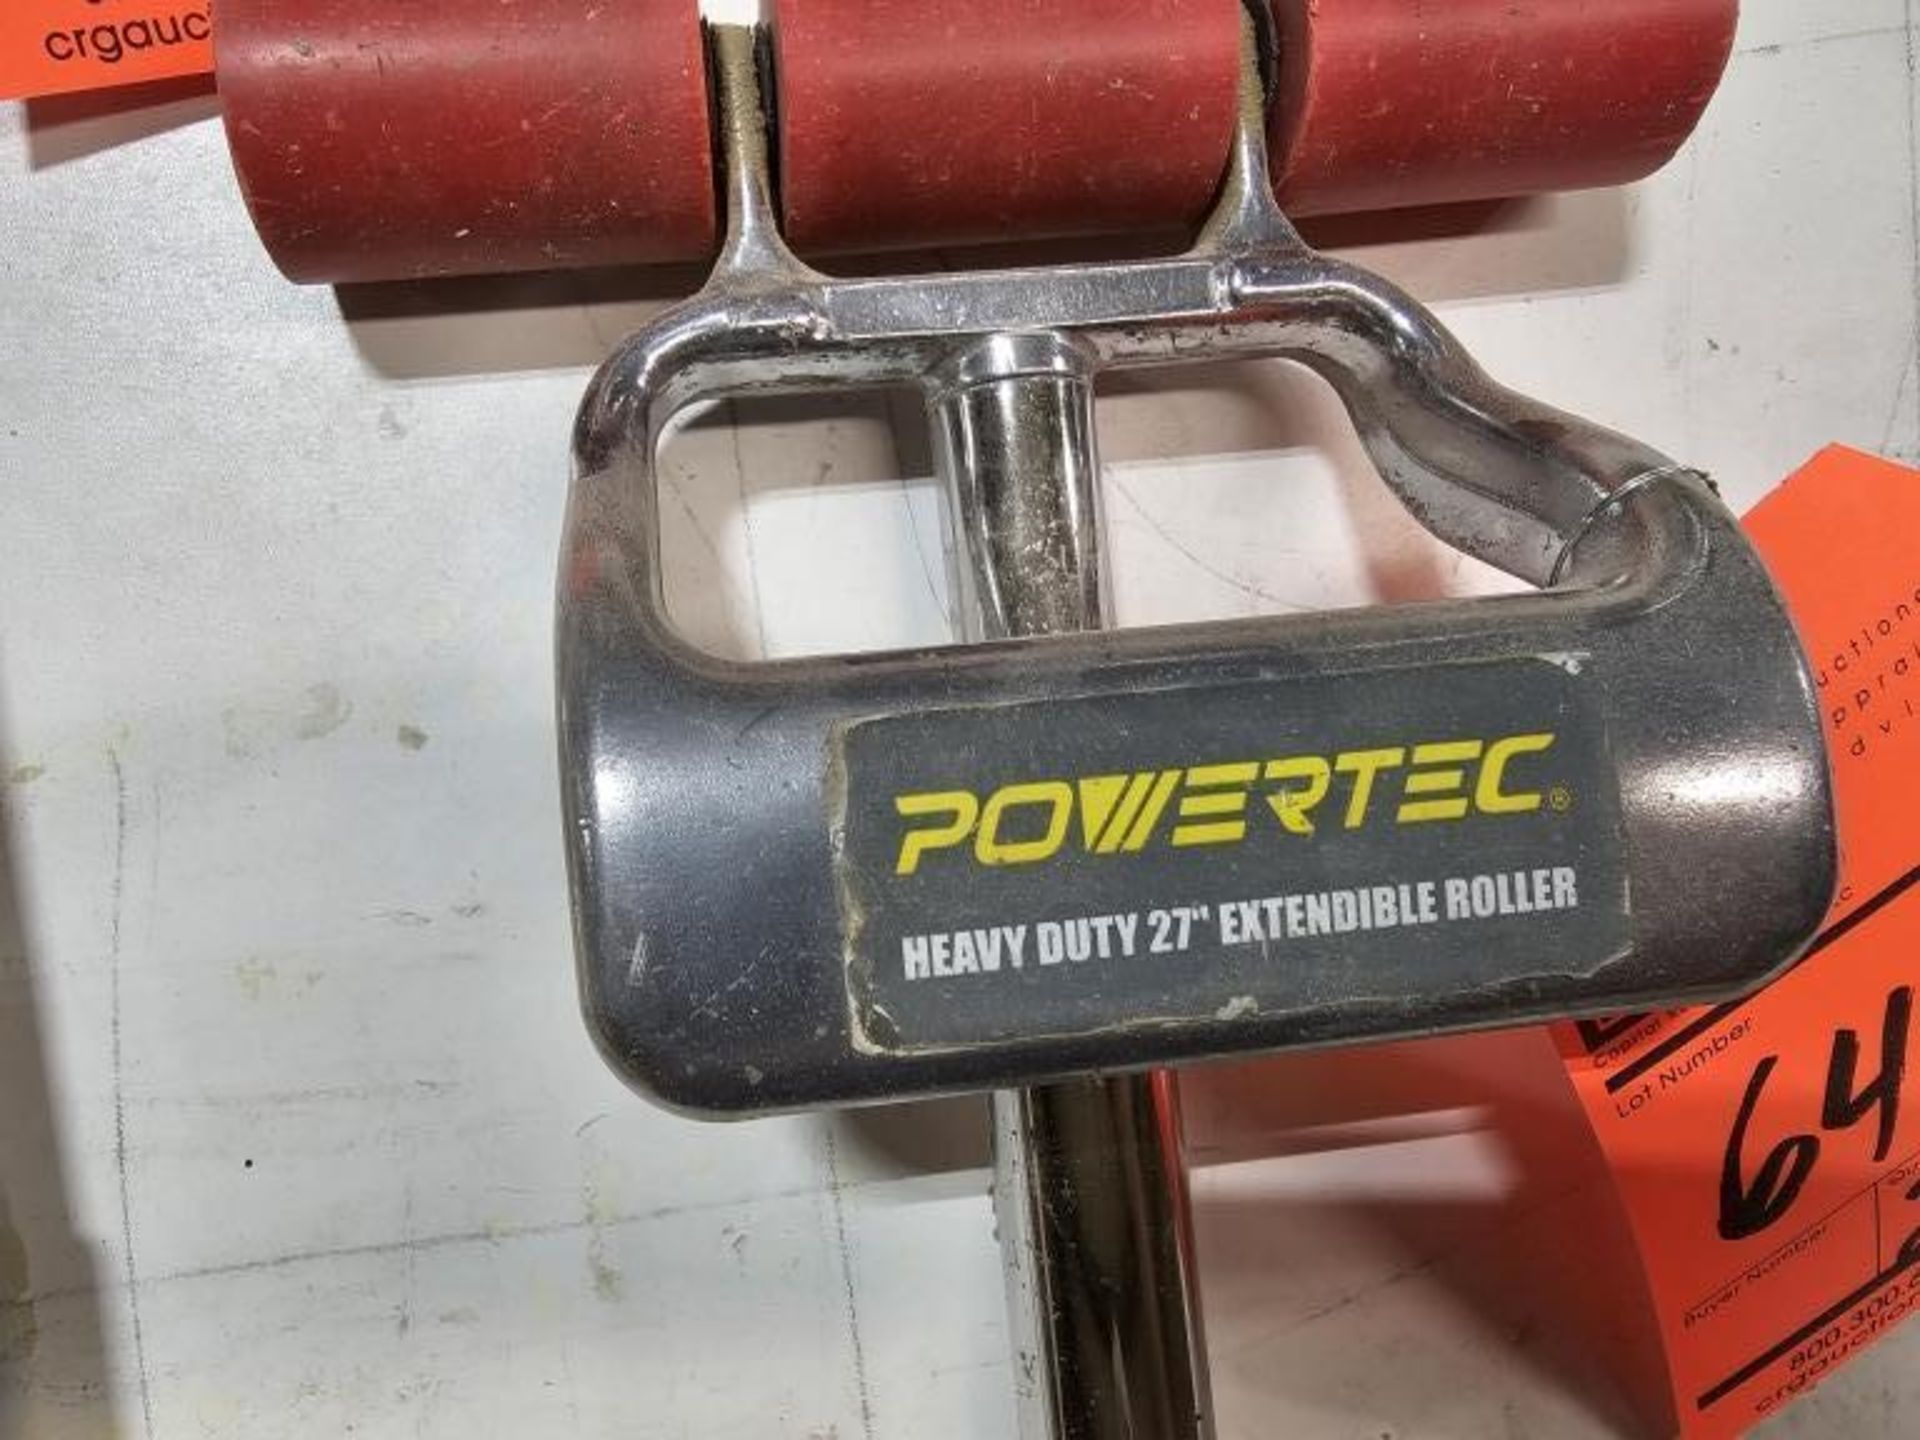 Powertec Extendible Rollers - Image 3 of 3